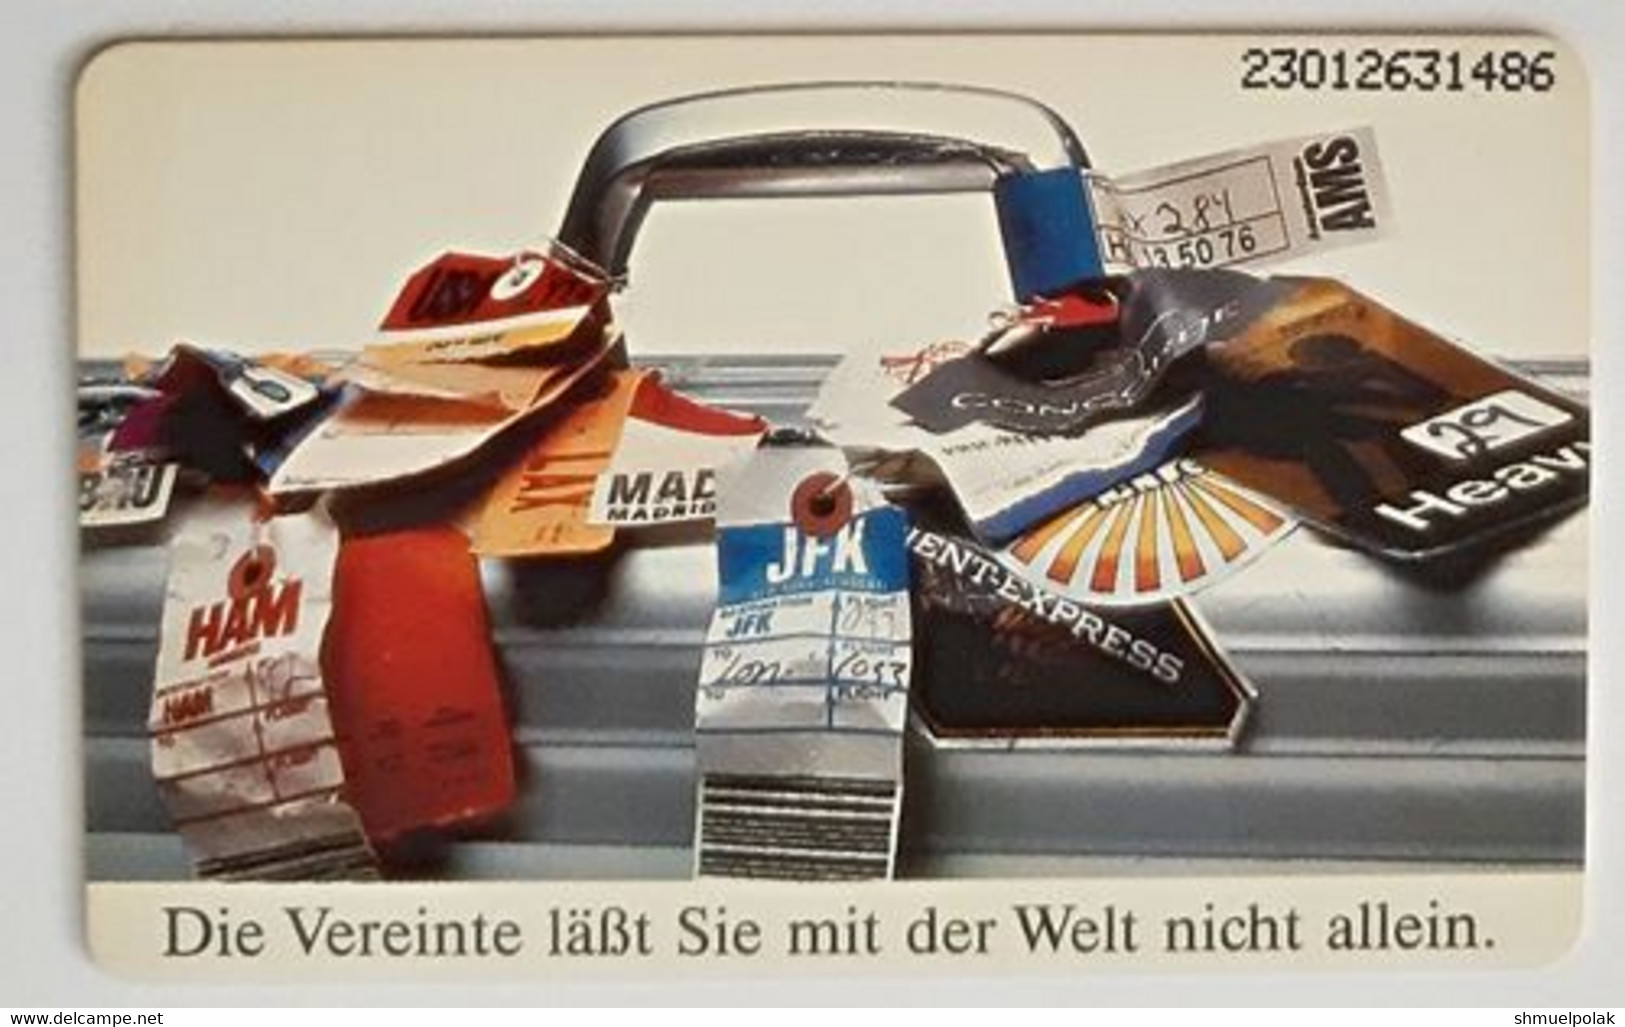 GERMANY Phone Card Telefonkarte Deutsche Telkom 1993 6DM 31000 Units Have Been Issued - Otros & Sin Clasificación